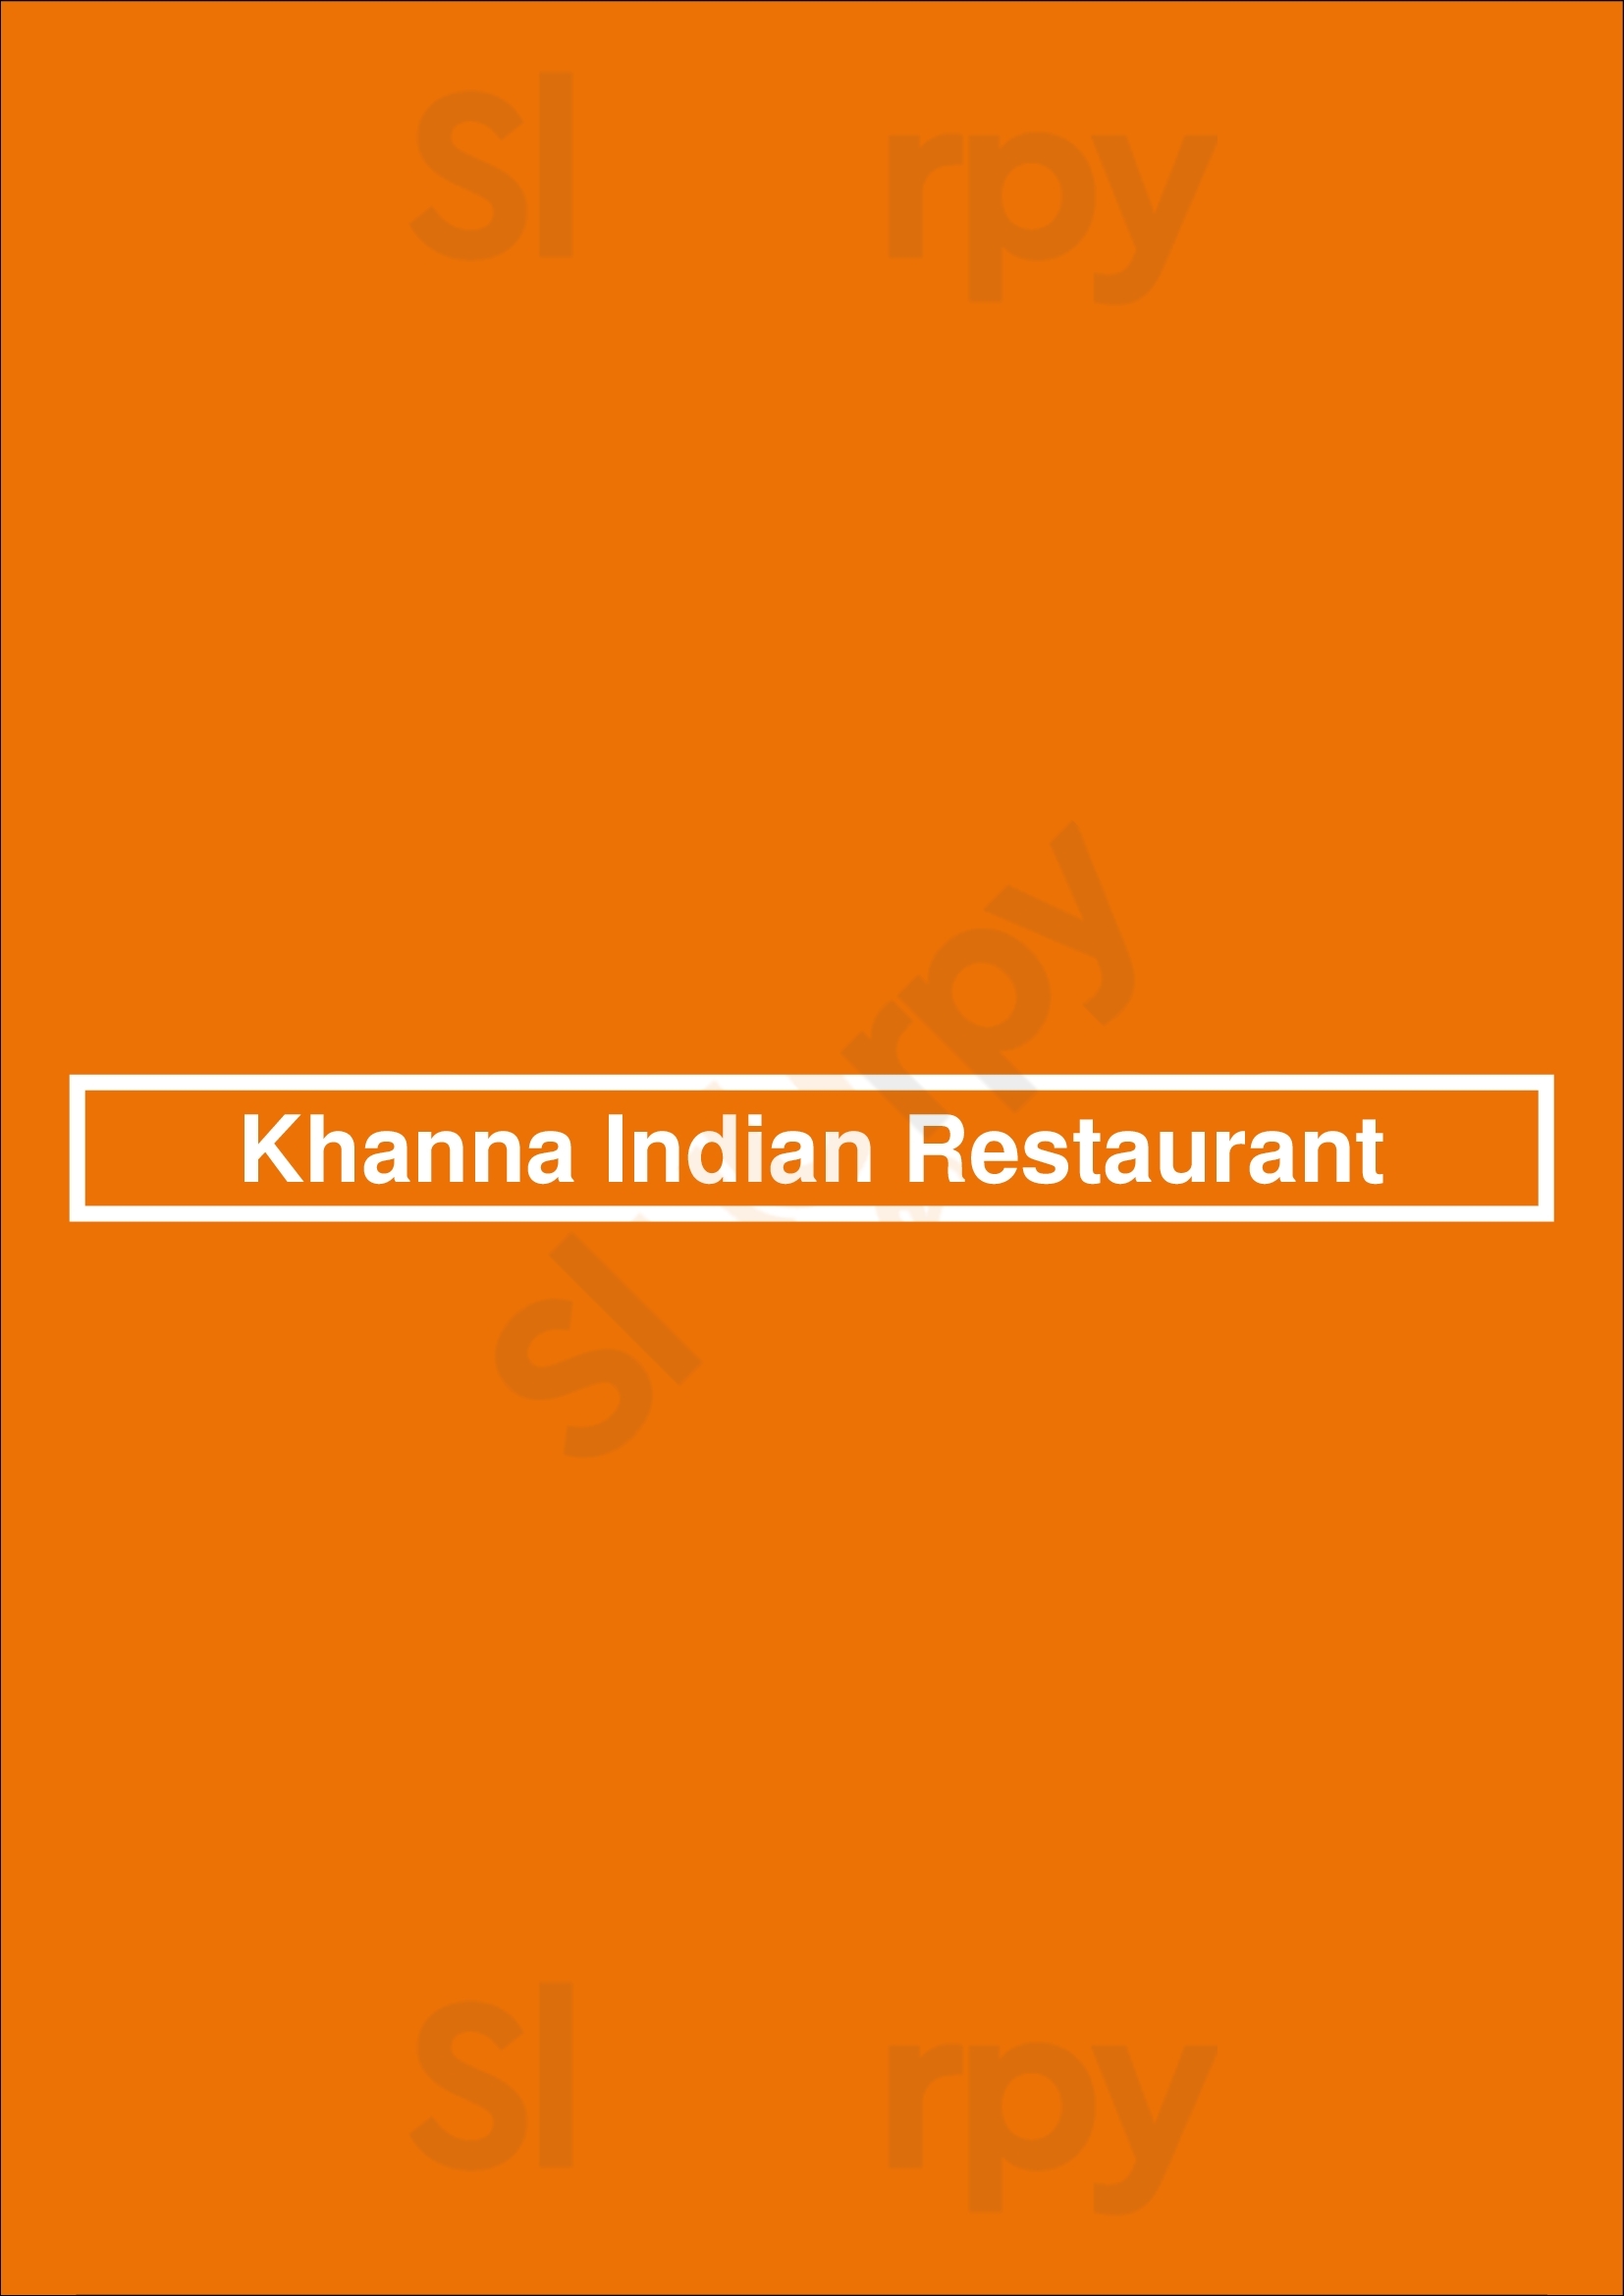 Khanna Indian Restaurant Perth Menu - 1